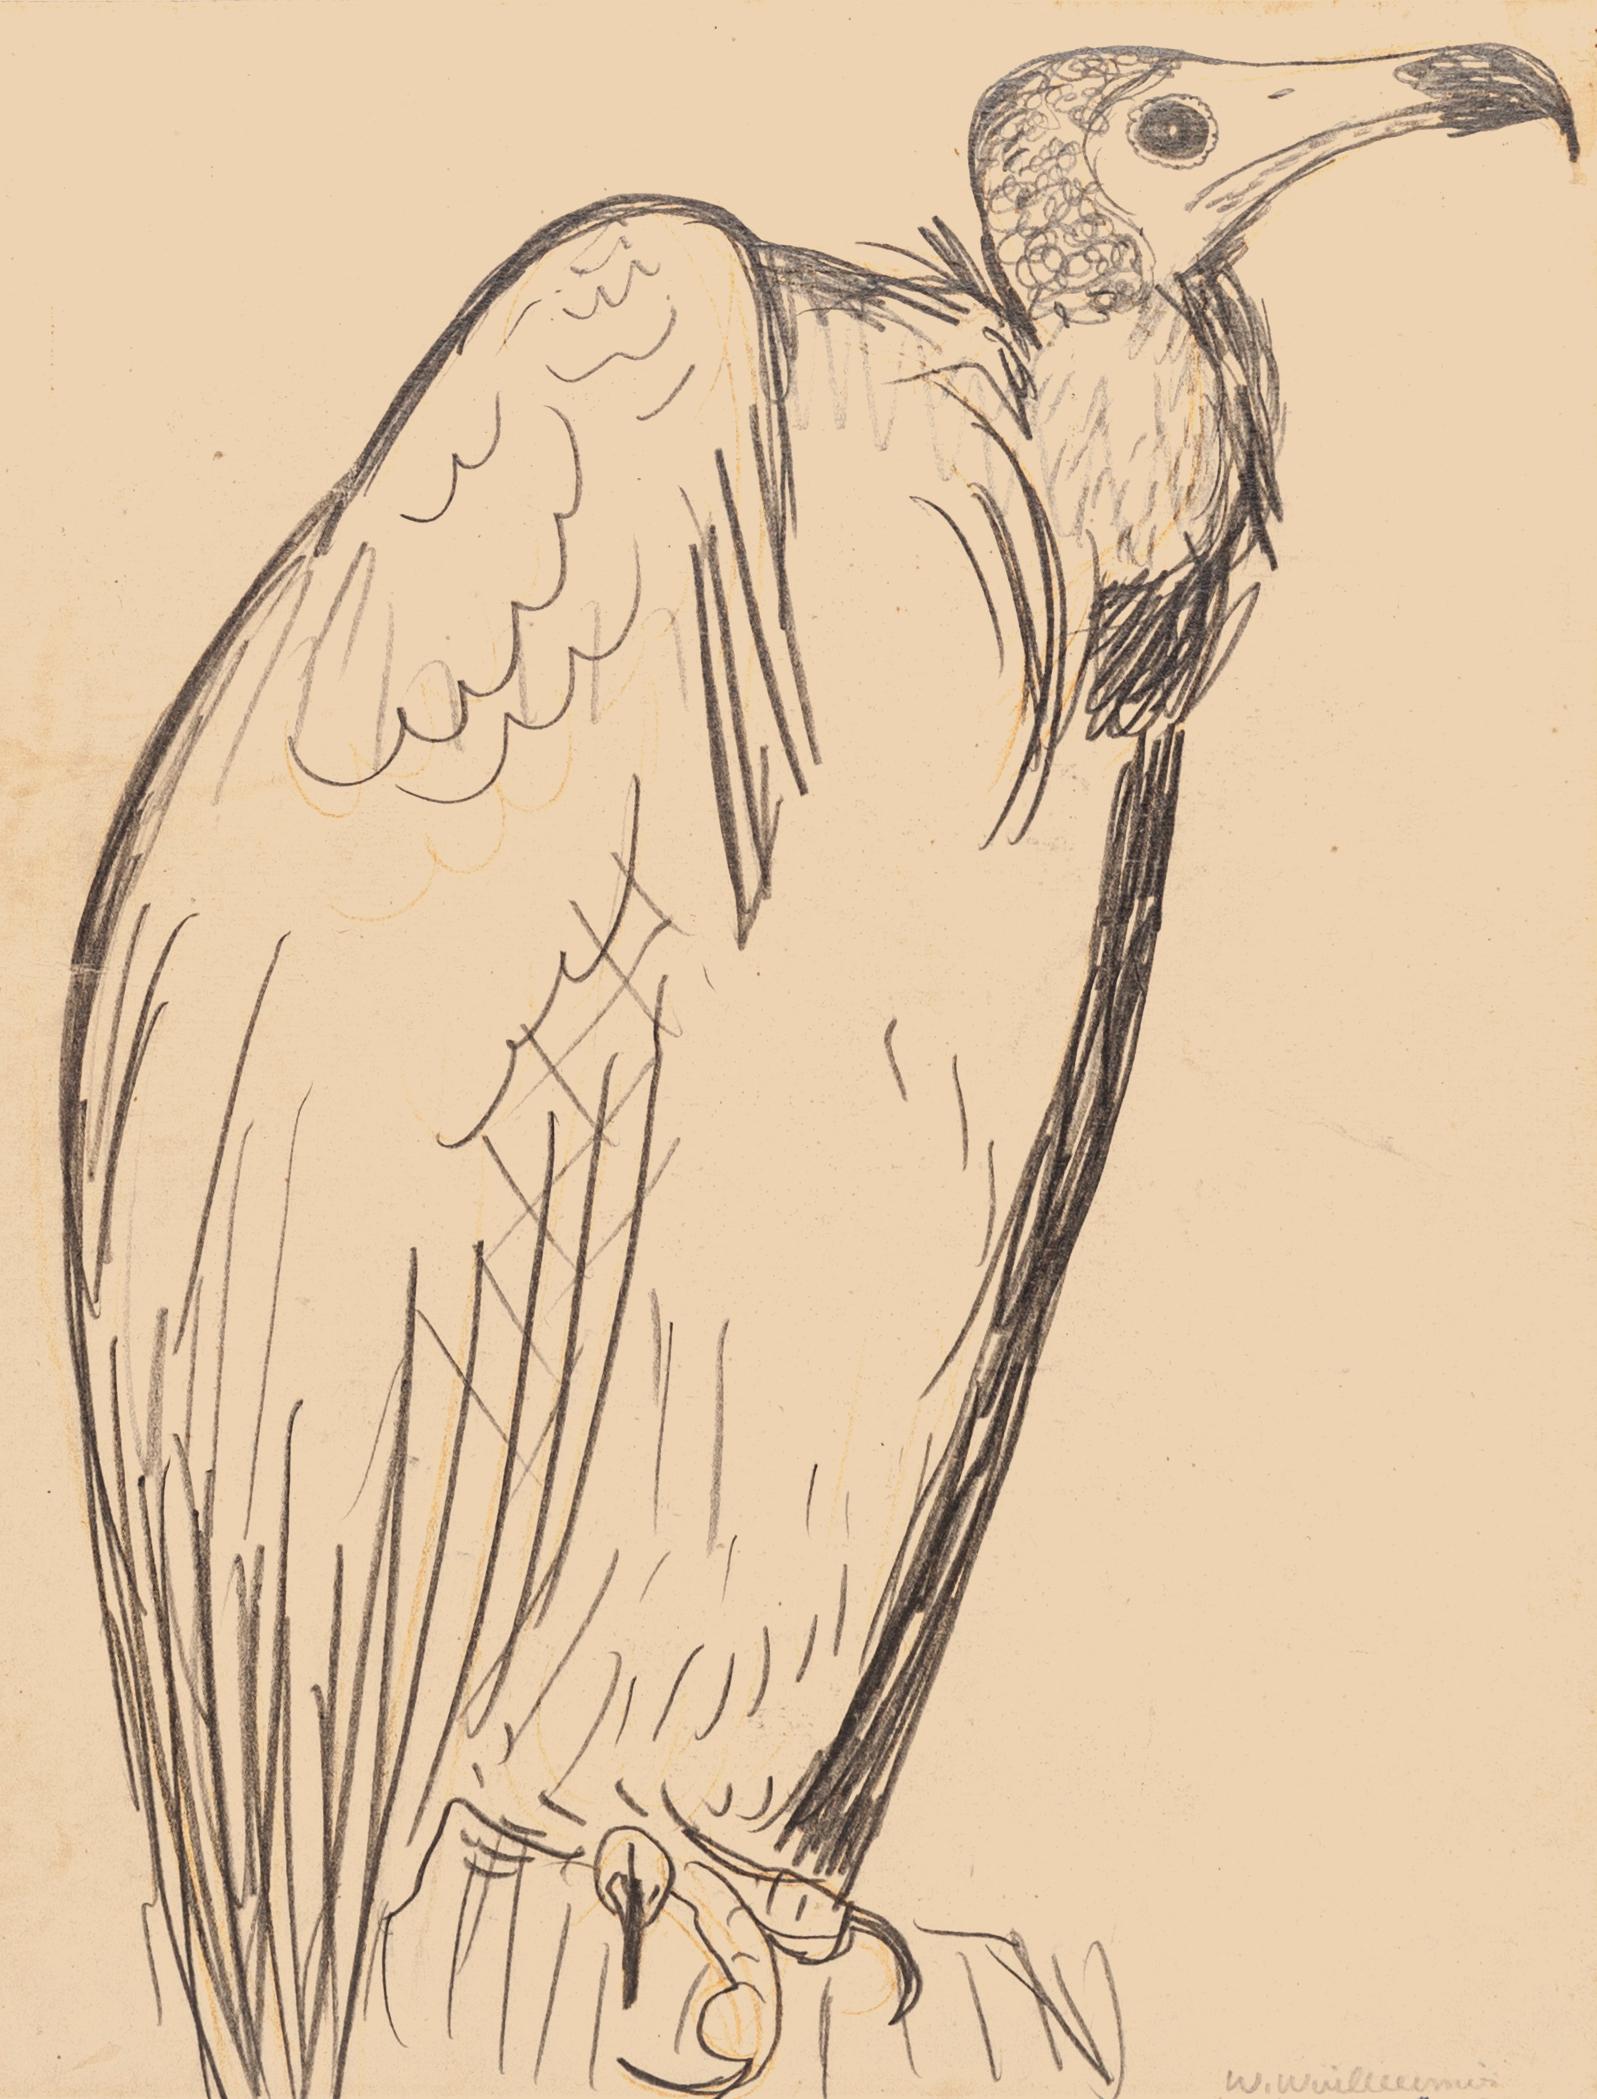 Unknown Animal Art - The Condor - Original Pencil Drawing - Mid 20th Century